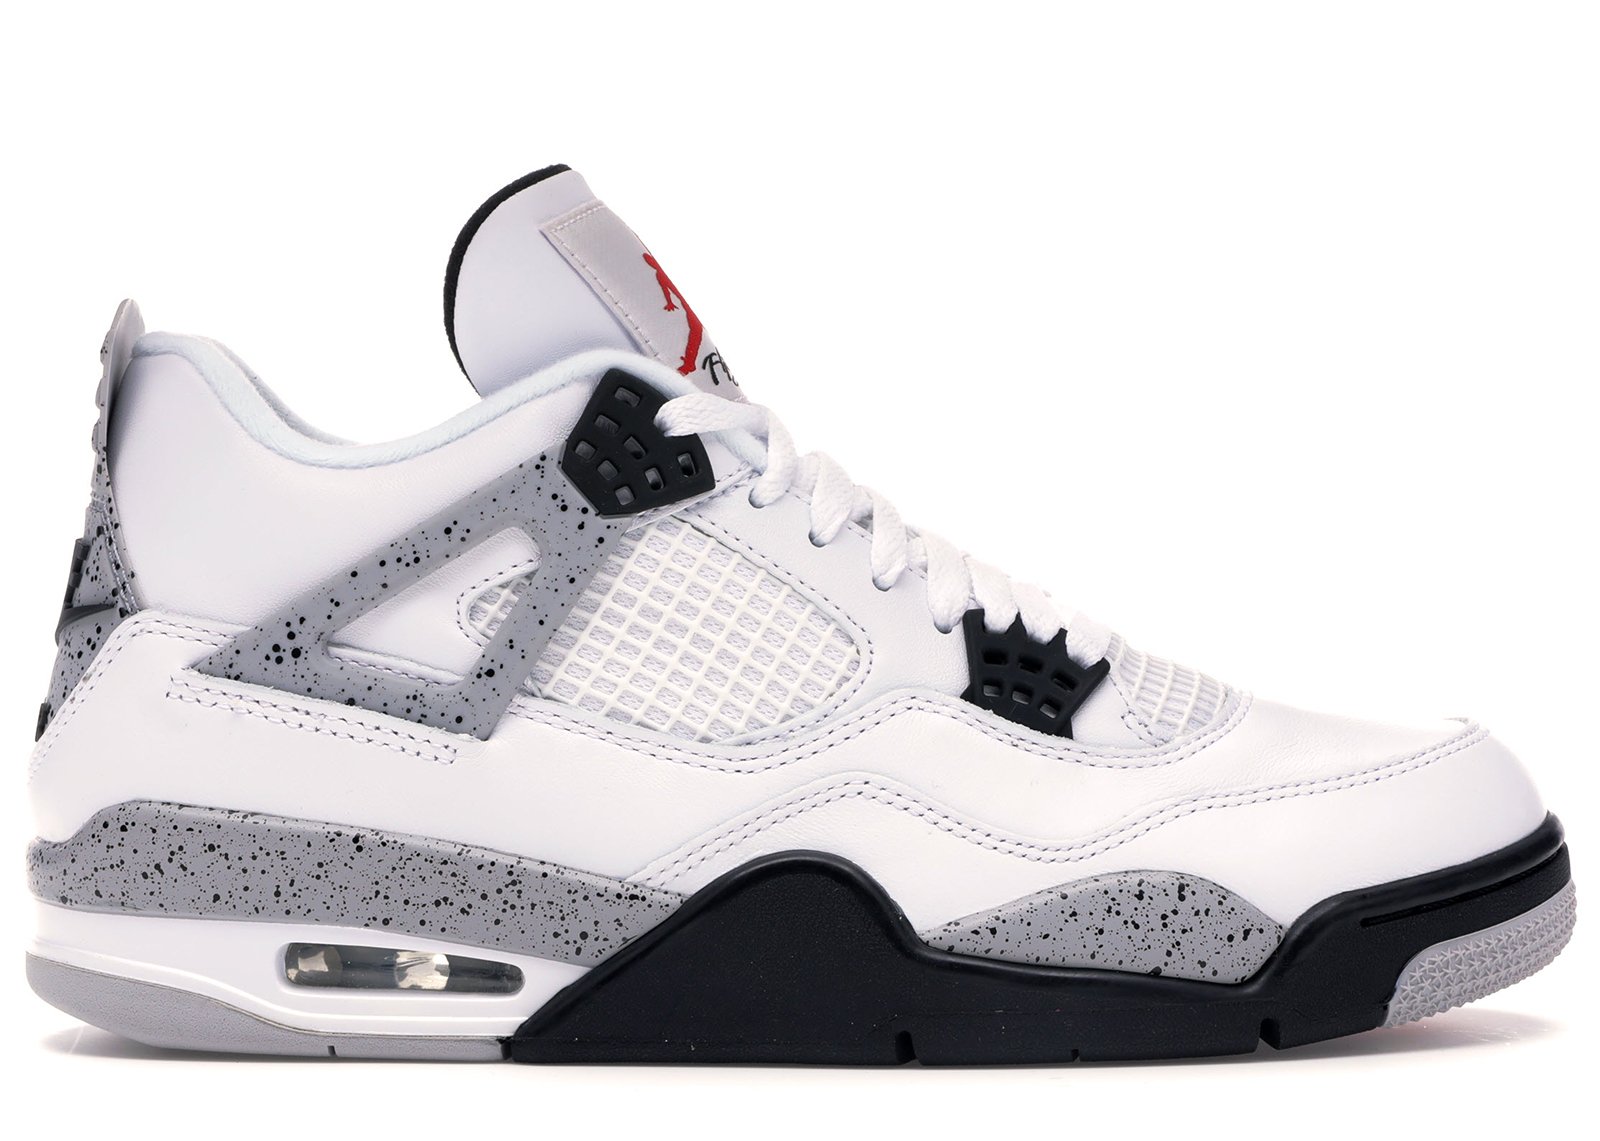 Jordan 4 Retro White Cement (2016) sneakers